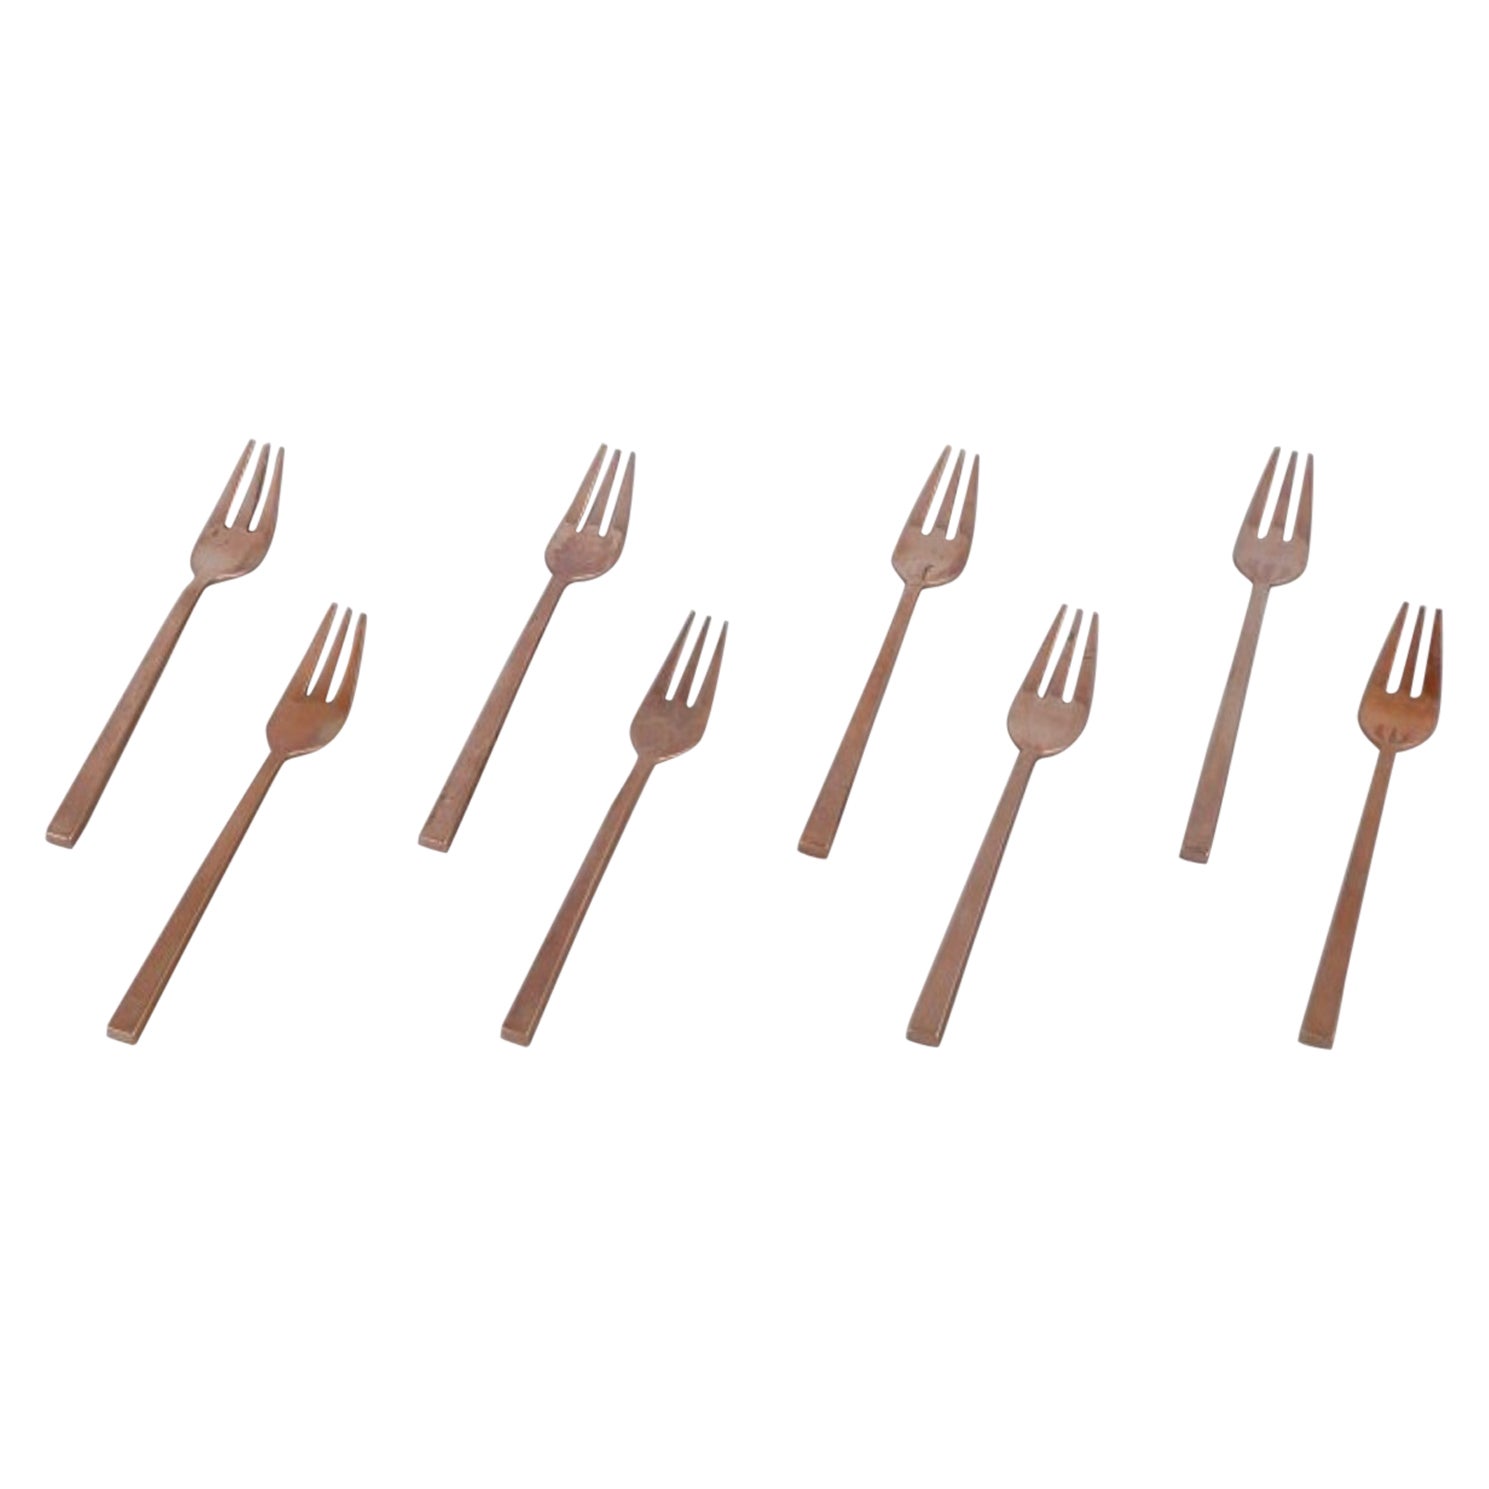 Sigvard Bernadotte 'Scanline' cutlery set in brass. Eight cake forks. 